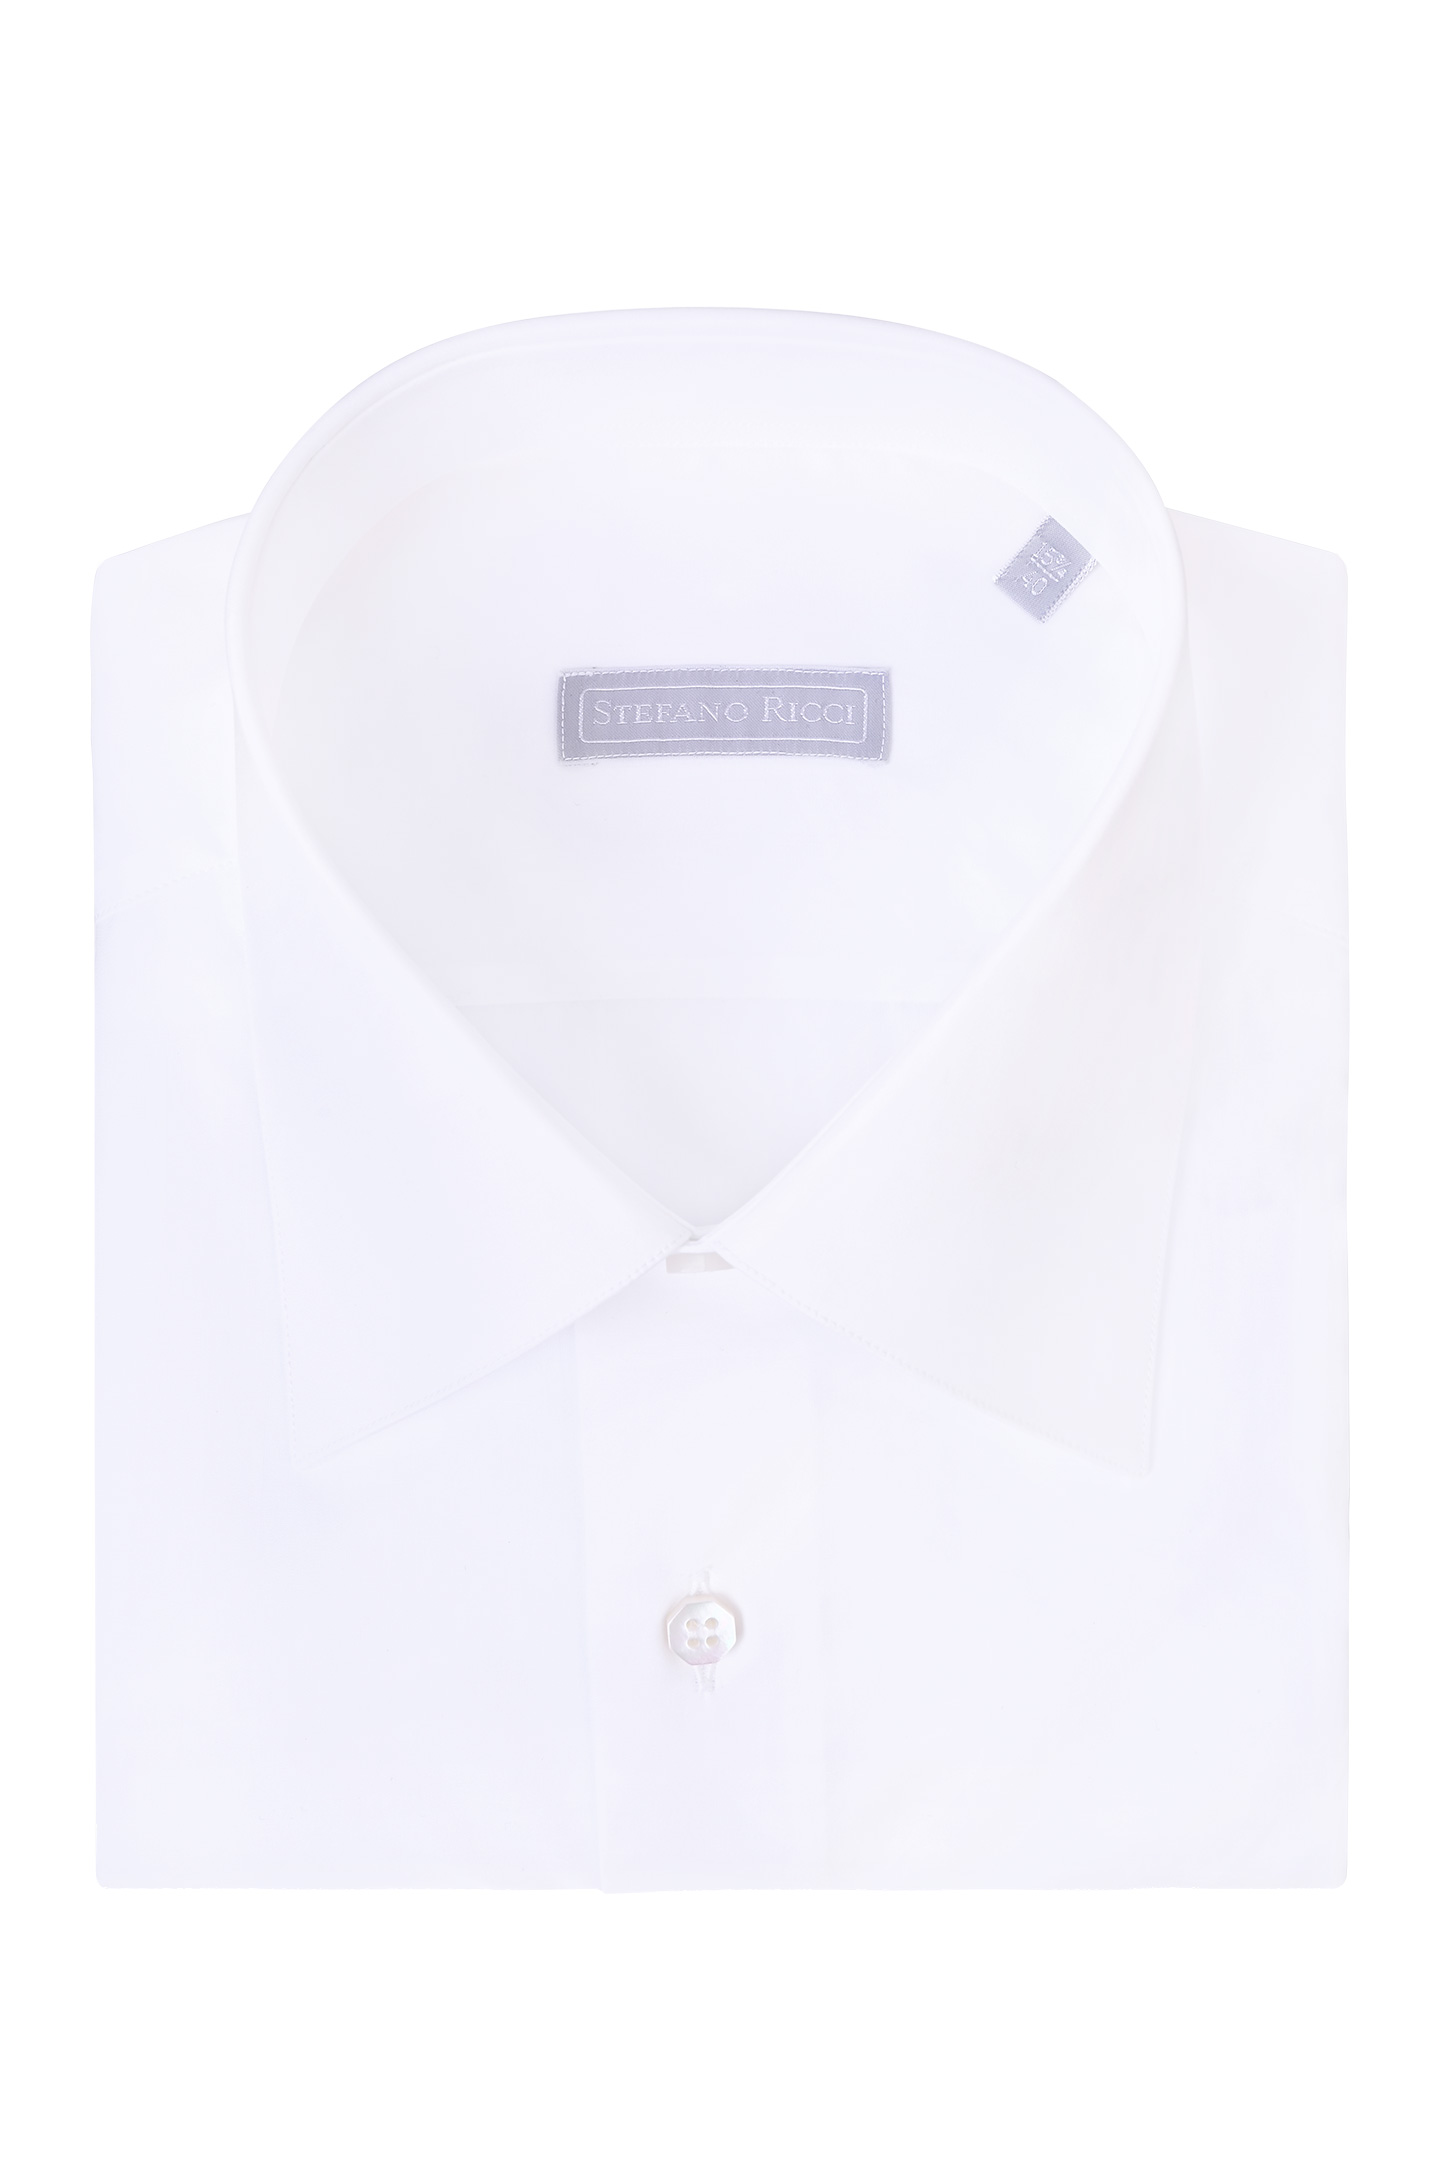 Рубашка STEFANO RICCI MC000359 A304, цвет: Белый, Мужской